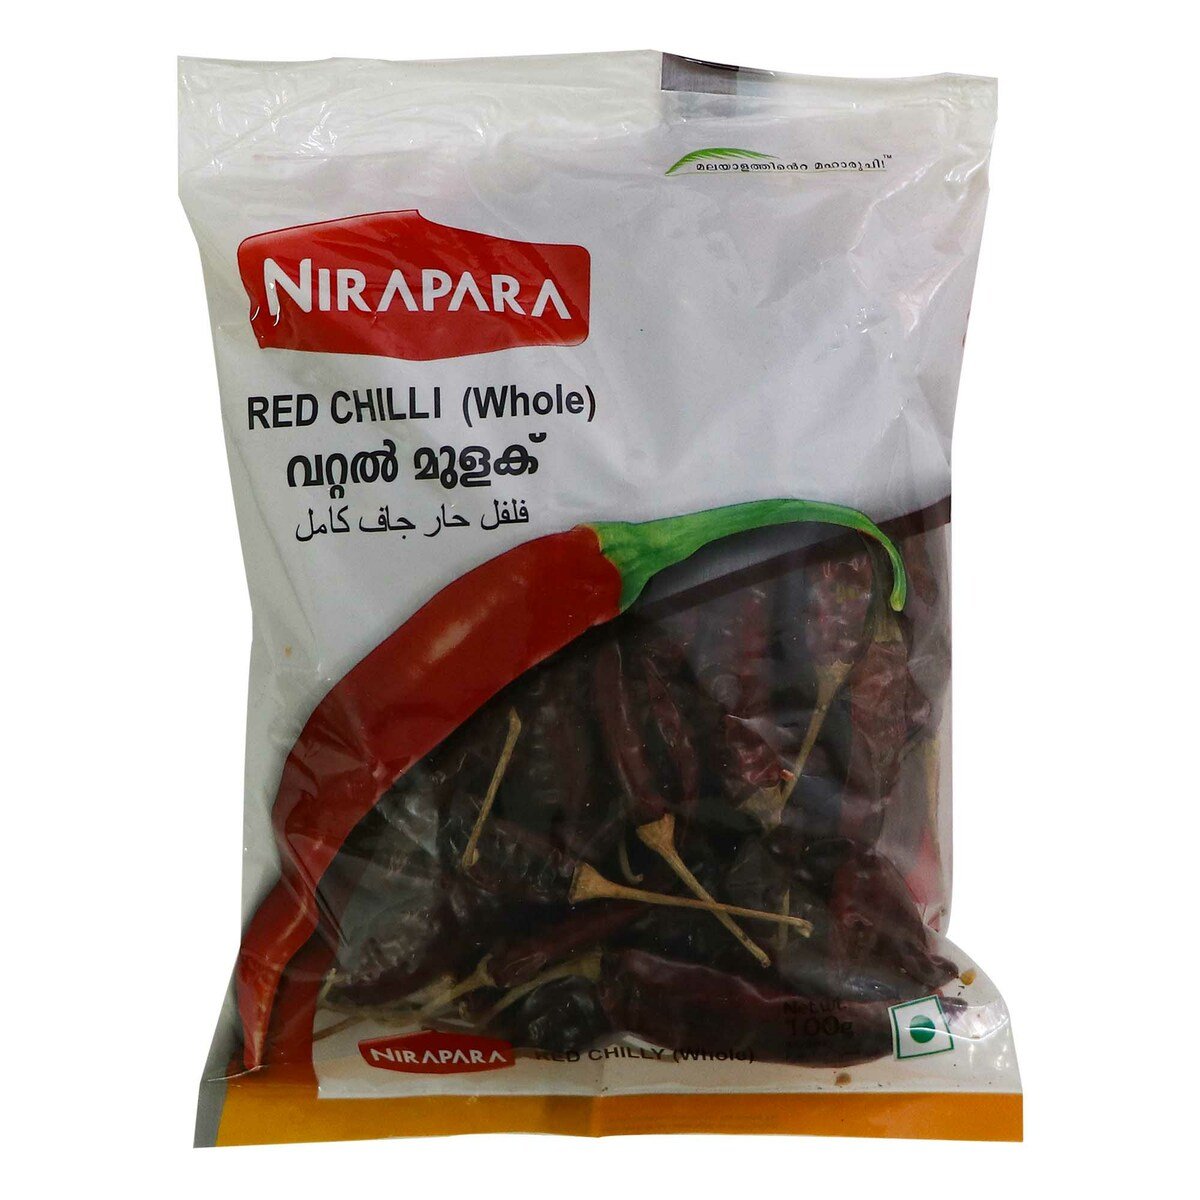 Nirapara Red Chilli (Whole) 100g